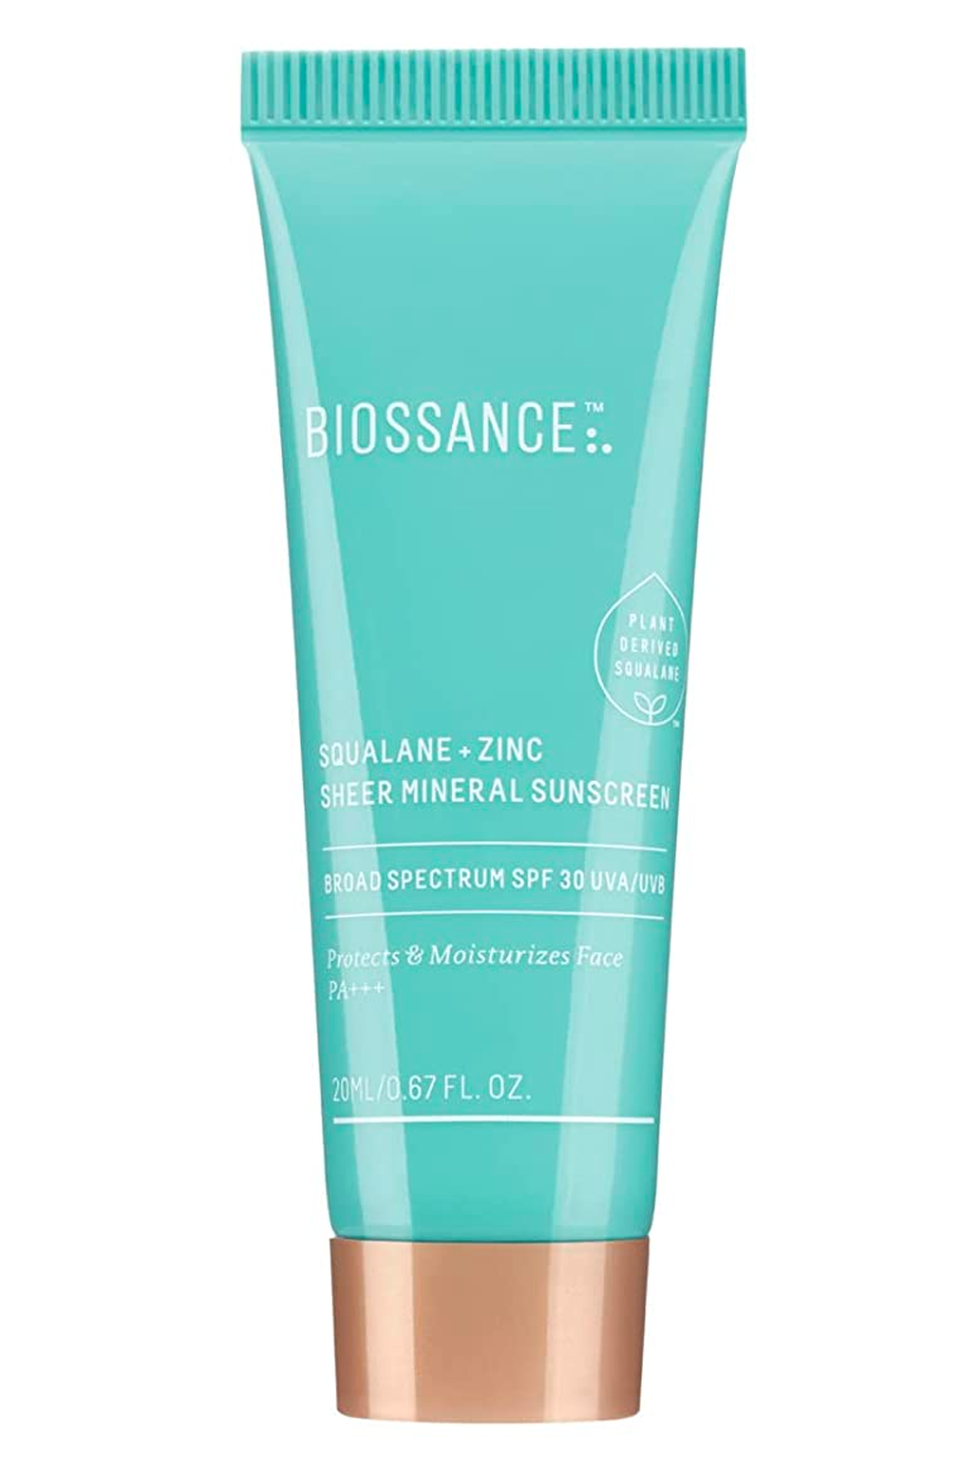 Biossance Squalane + Zinc Sheer Mineral Sunscreen SPF 30 PA+++